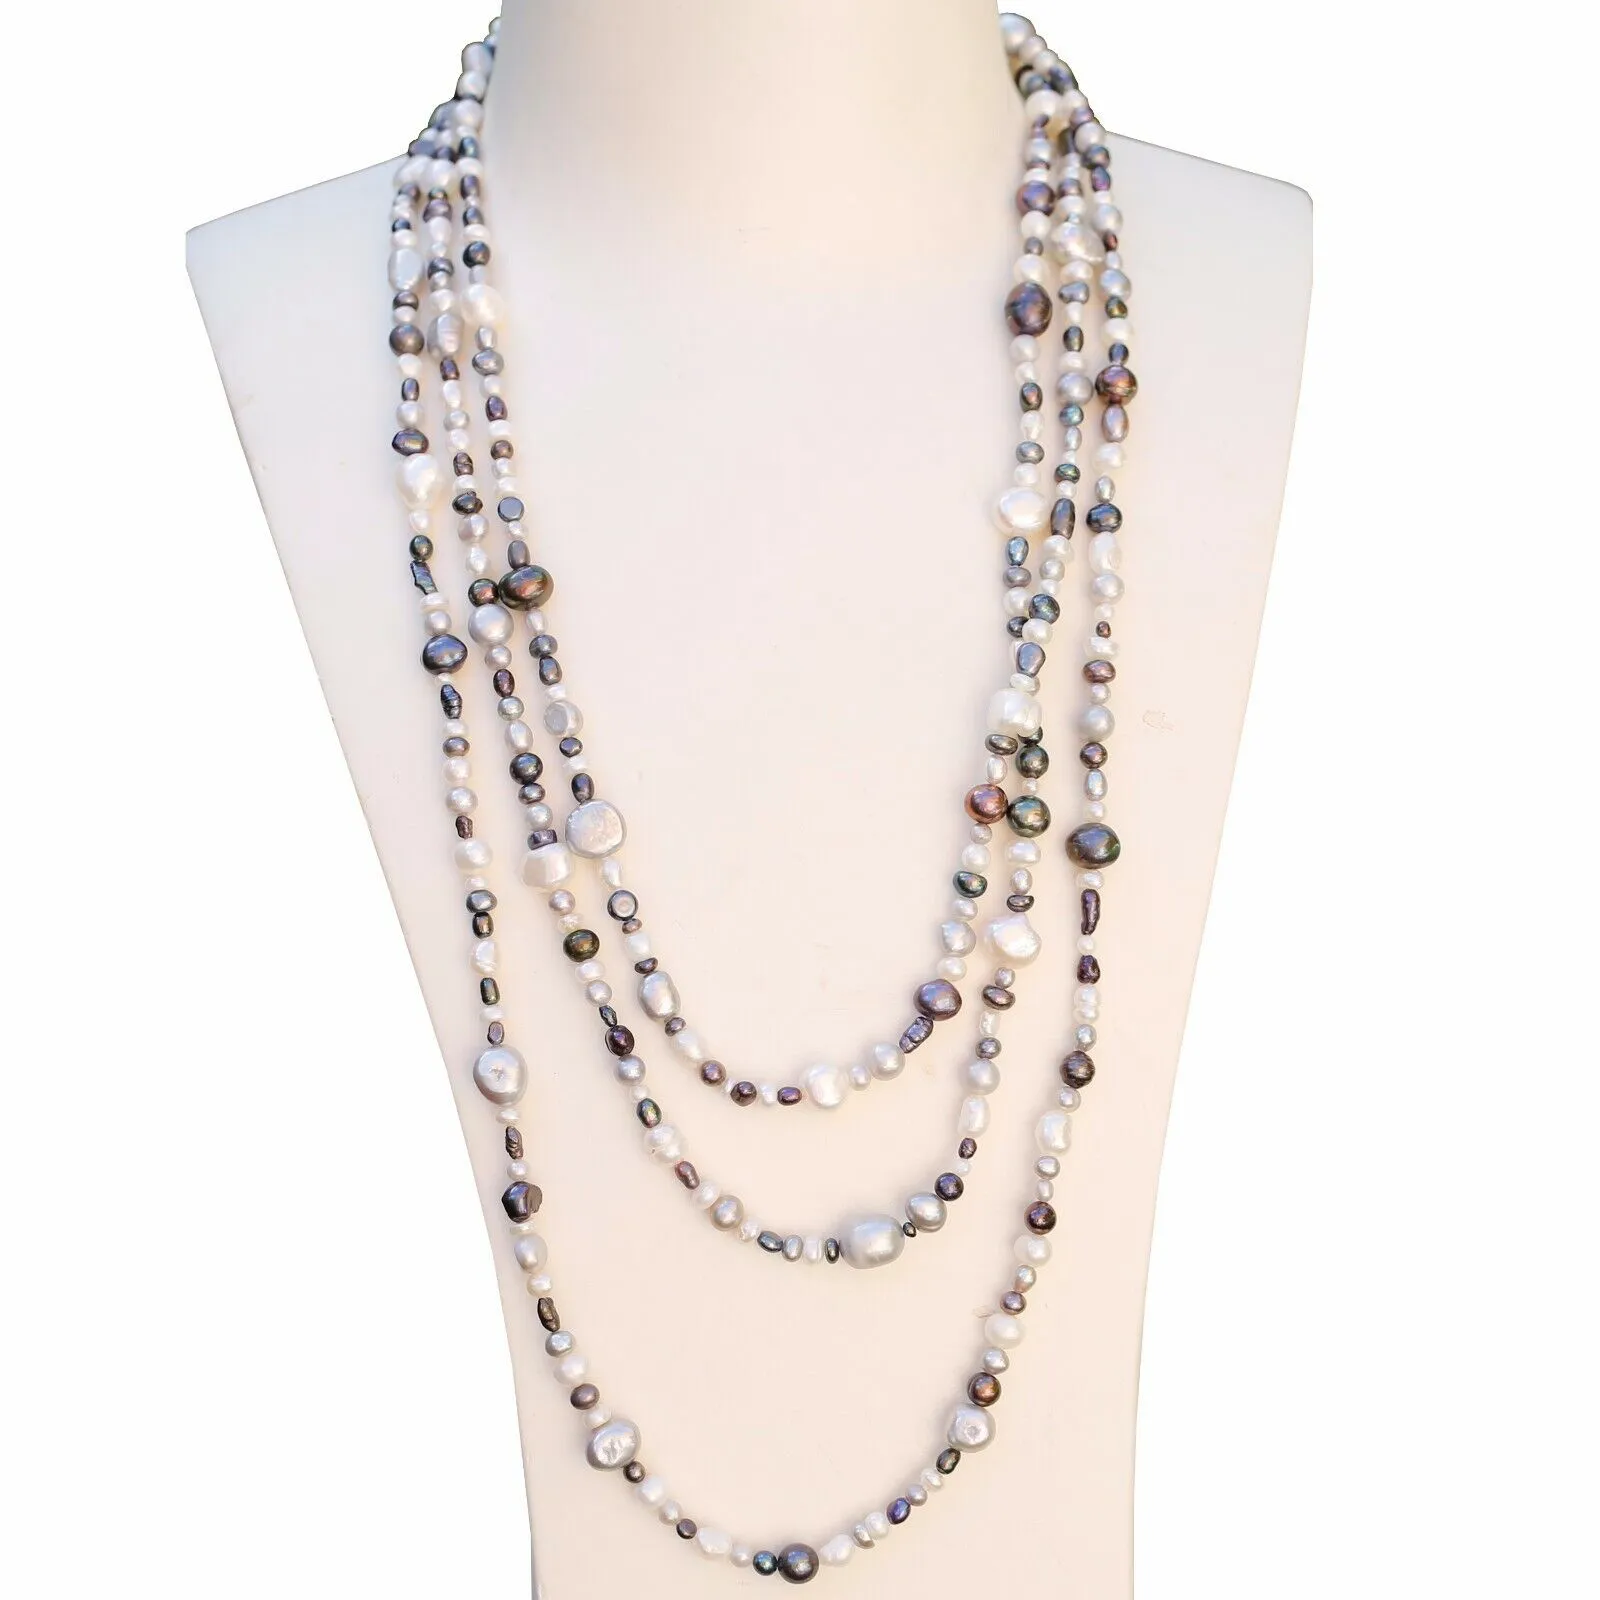 Handgefertigte Halskette, 180 cm, Größe 3–9 mm, barocke weiße, schwarze, graue Süßwasserperle in Morandi-Farbe